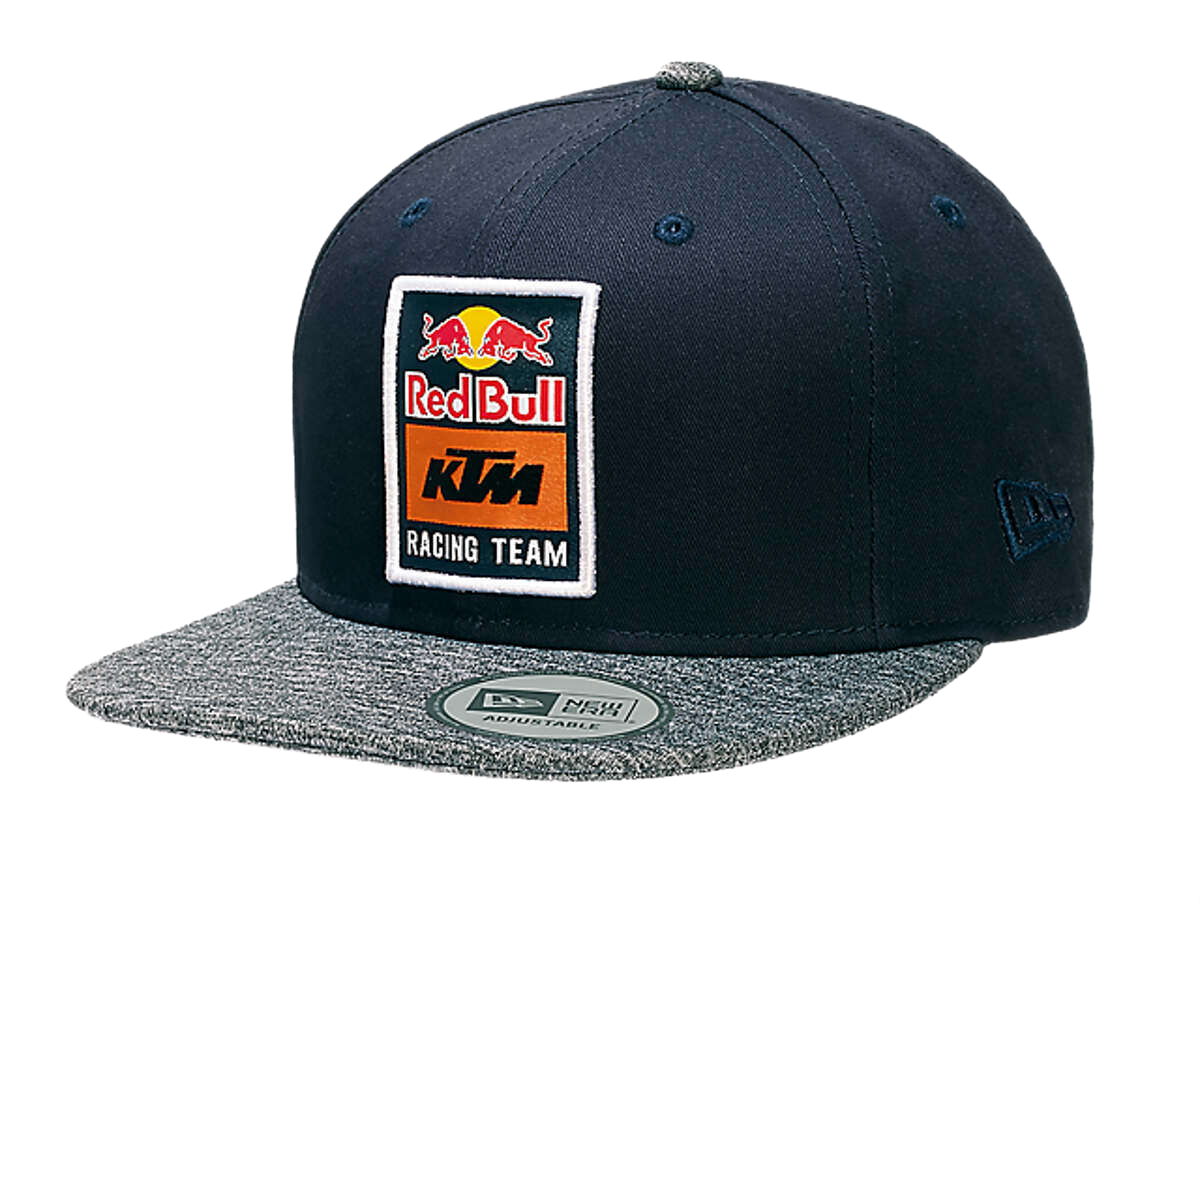 Red Bull Snapback Cap KTM Racing Team Shadow - Navy/Grey